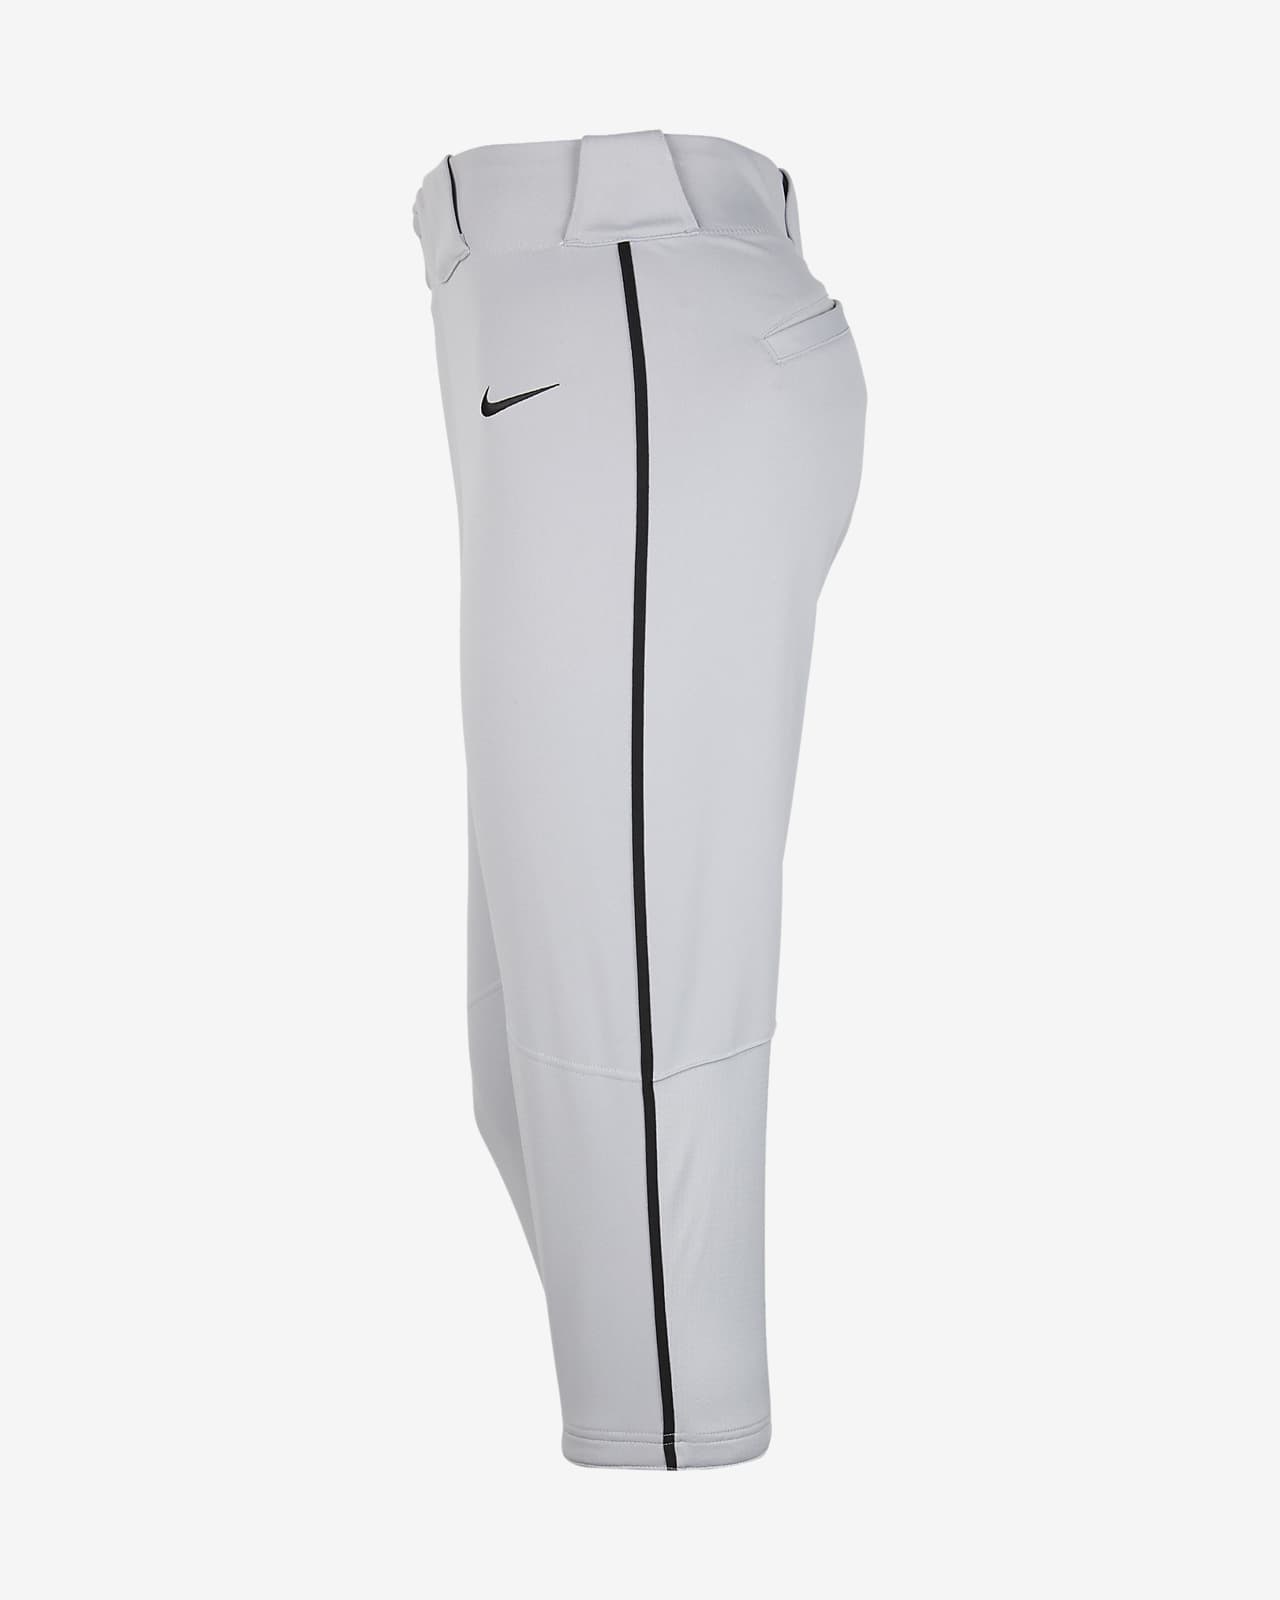 Nike Men's Vapor Select High Piped Knicker Baseball Pants, 59% OFF